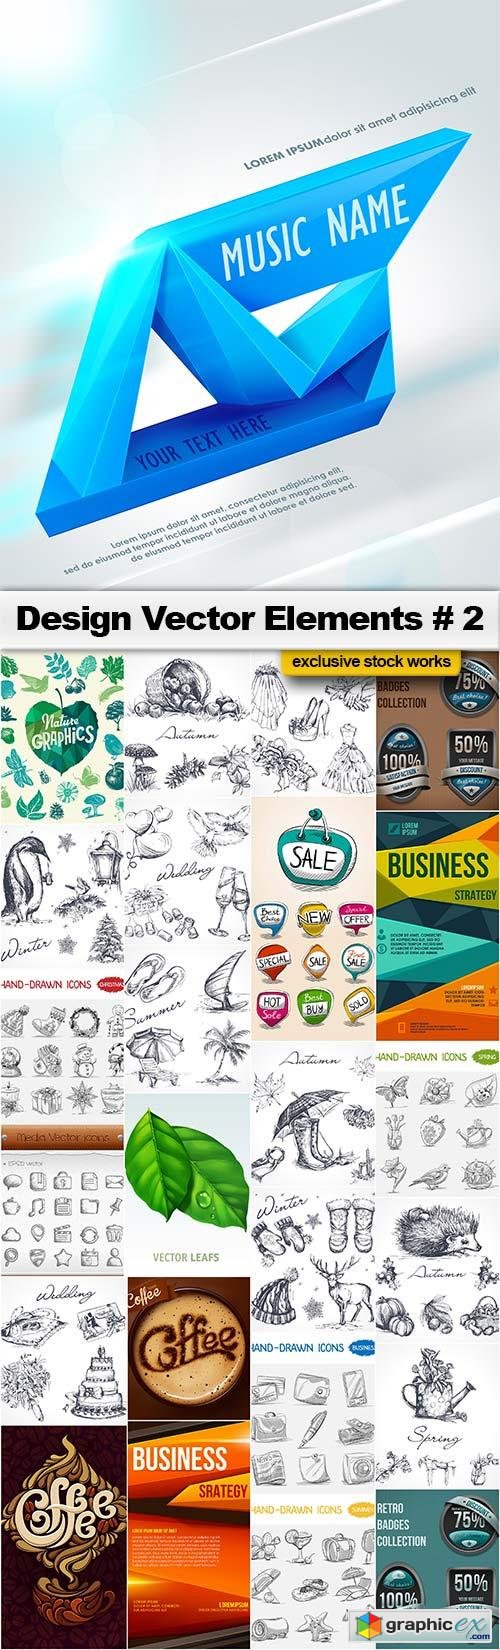 Design Vector Elements 2 - 25x EPS